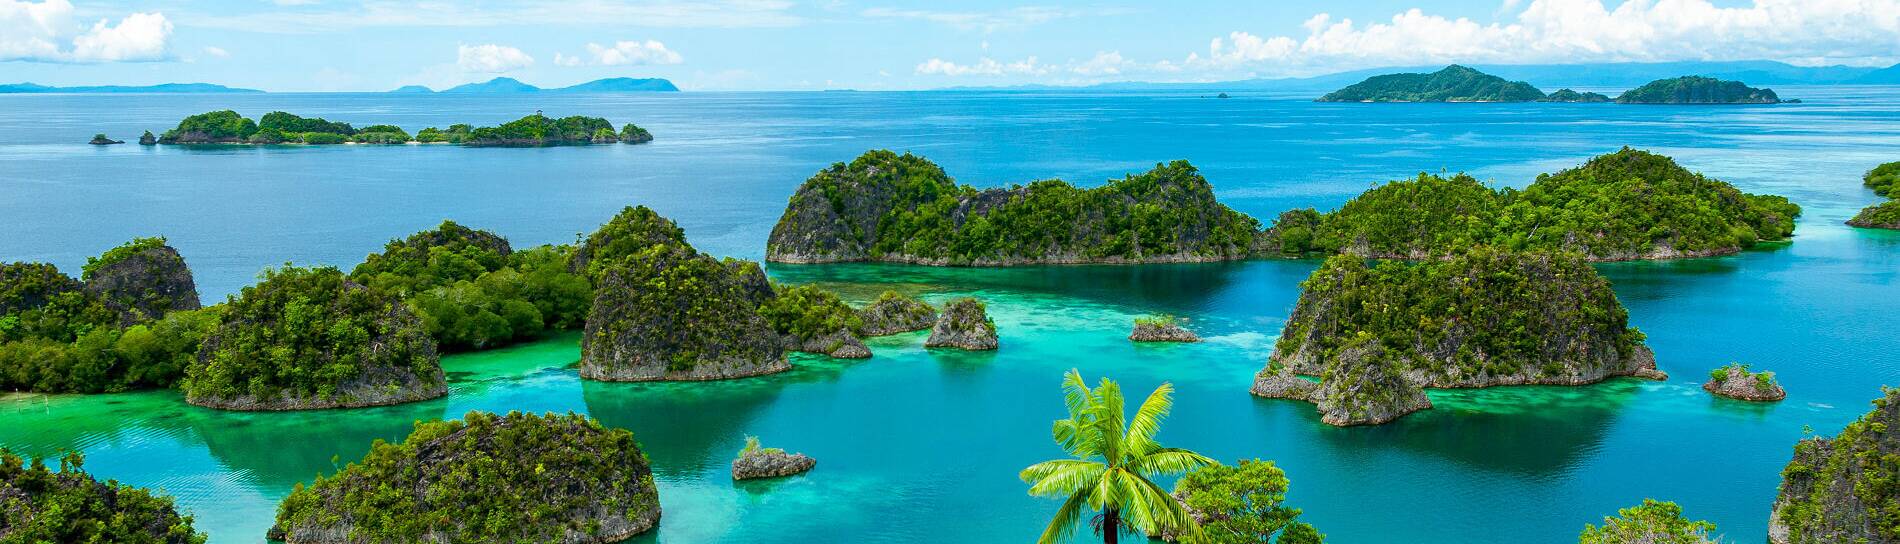 Indonesiens Inselwelten: Perlenkette im azurblauen Meer